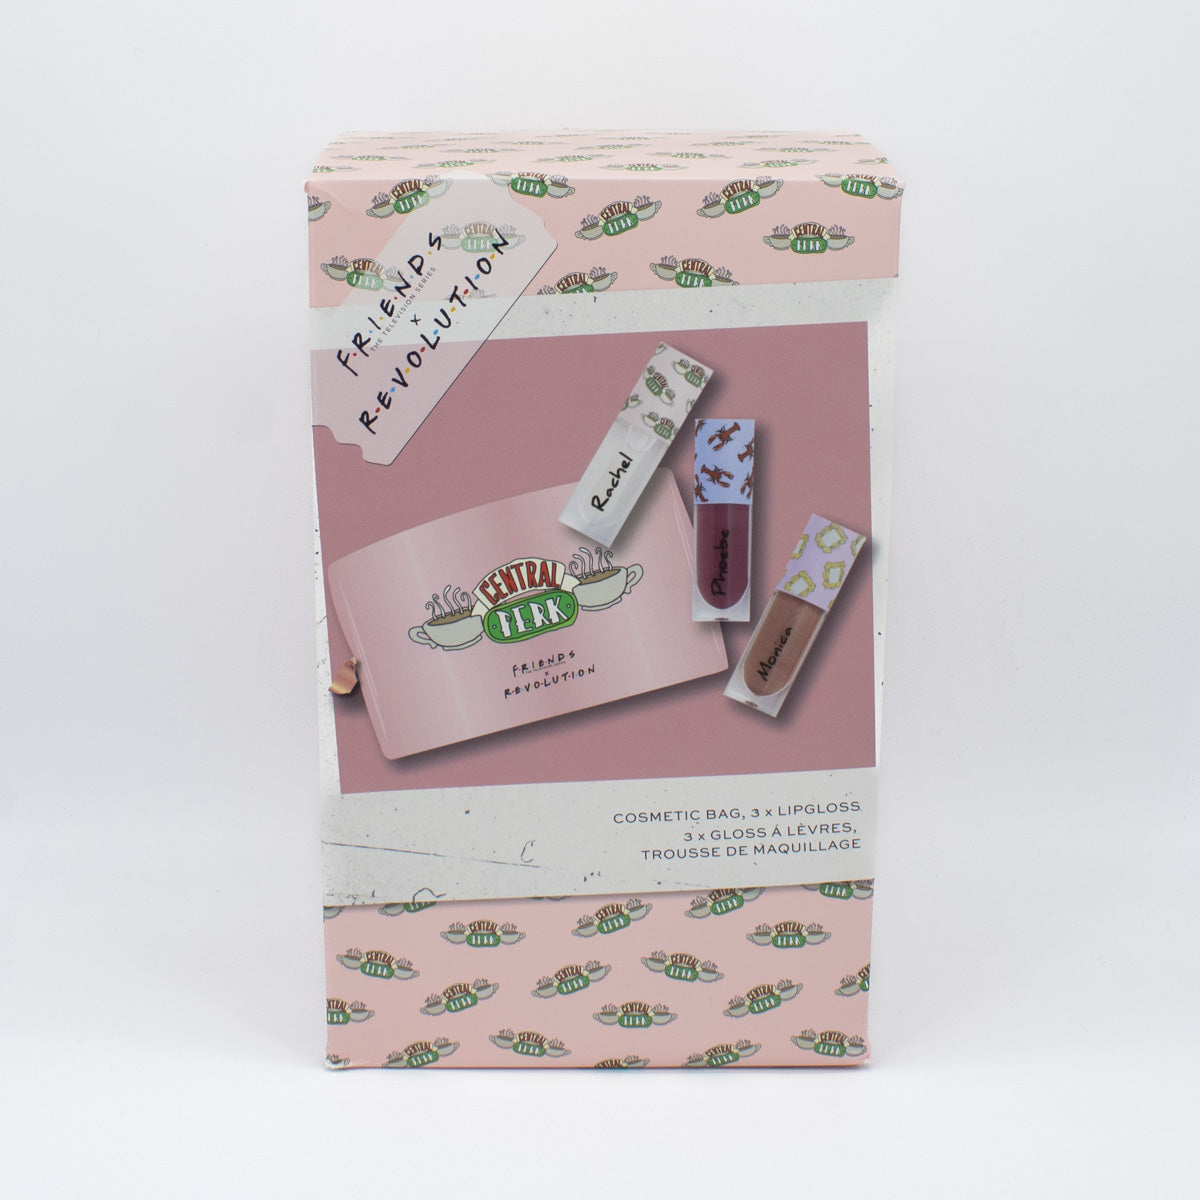 REVOLUTION X Friends Cosmetic Bag & 3 X Lipgloss Bundle - Imperfect Box